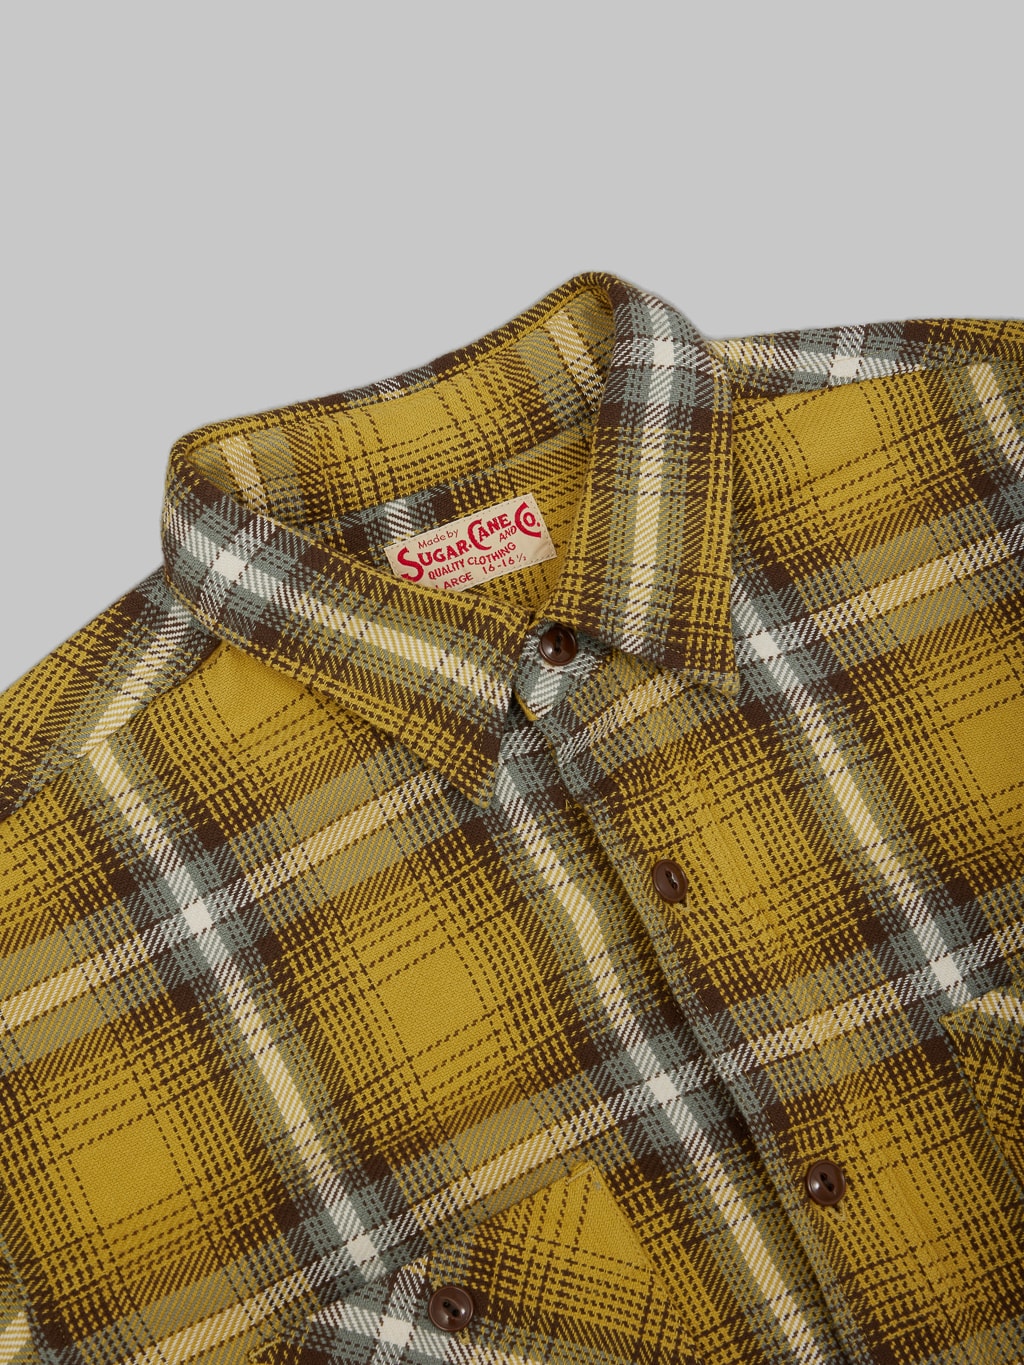 sugar cane twill check work shirt flannel yellow collar button